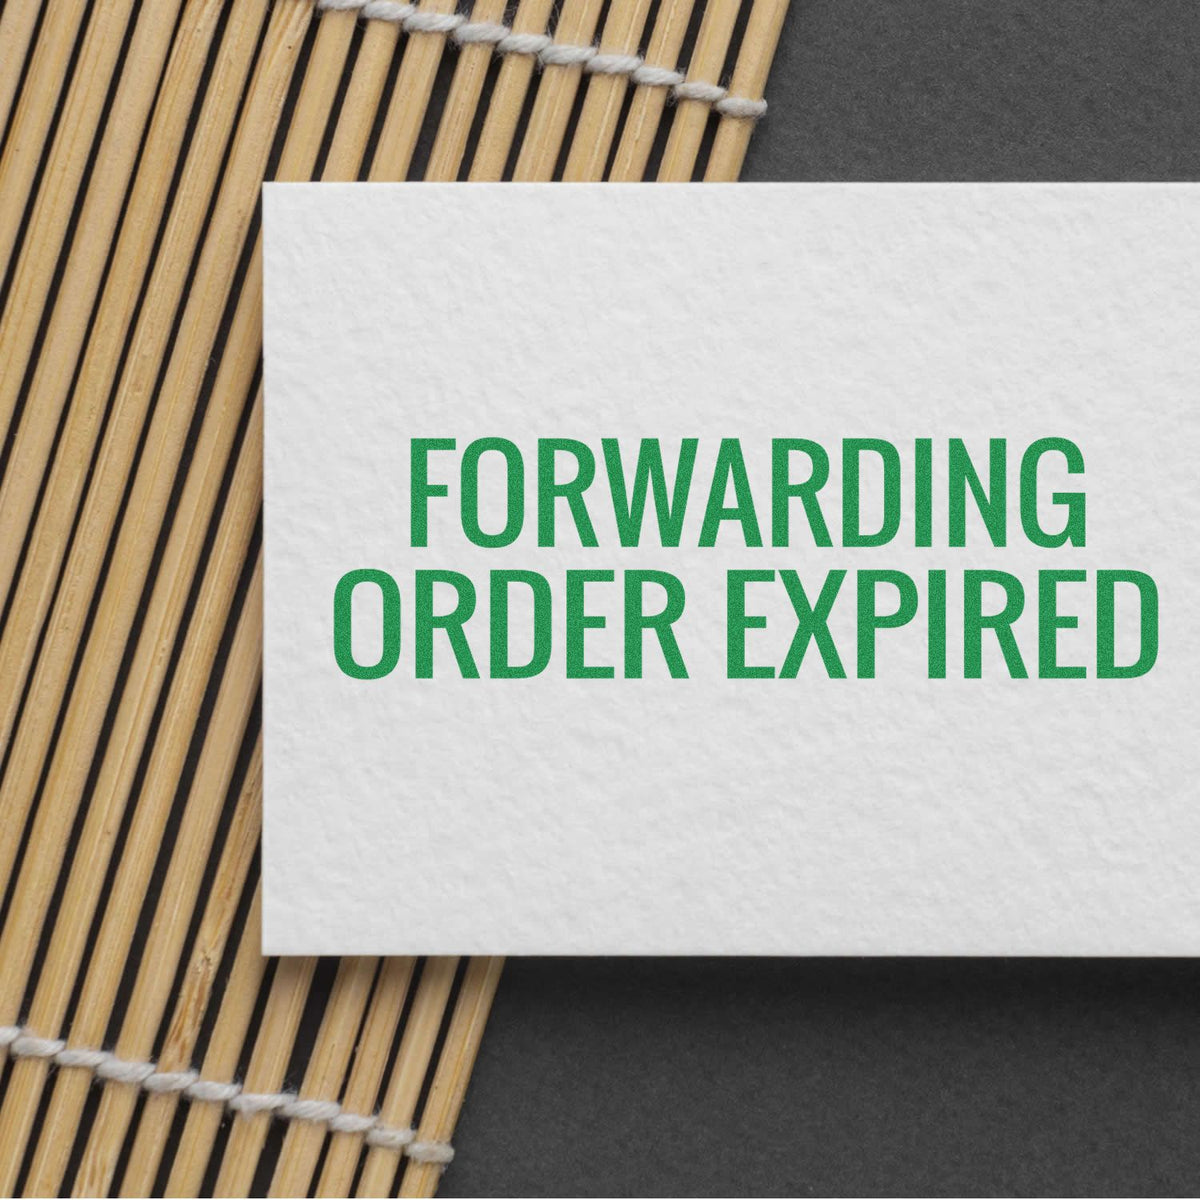 Self-Inking Forwarding Order Expiring Stamp In Use